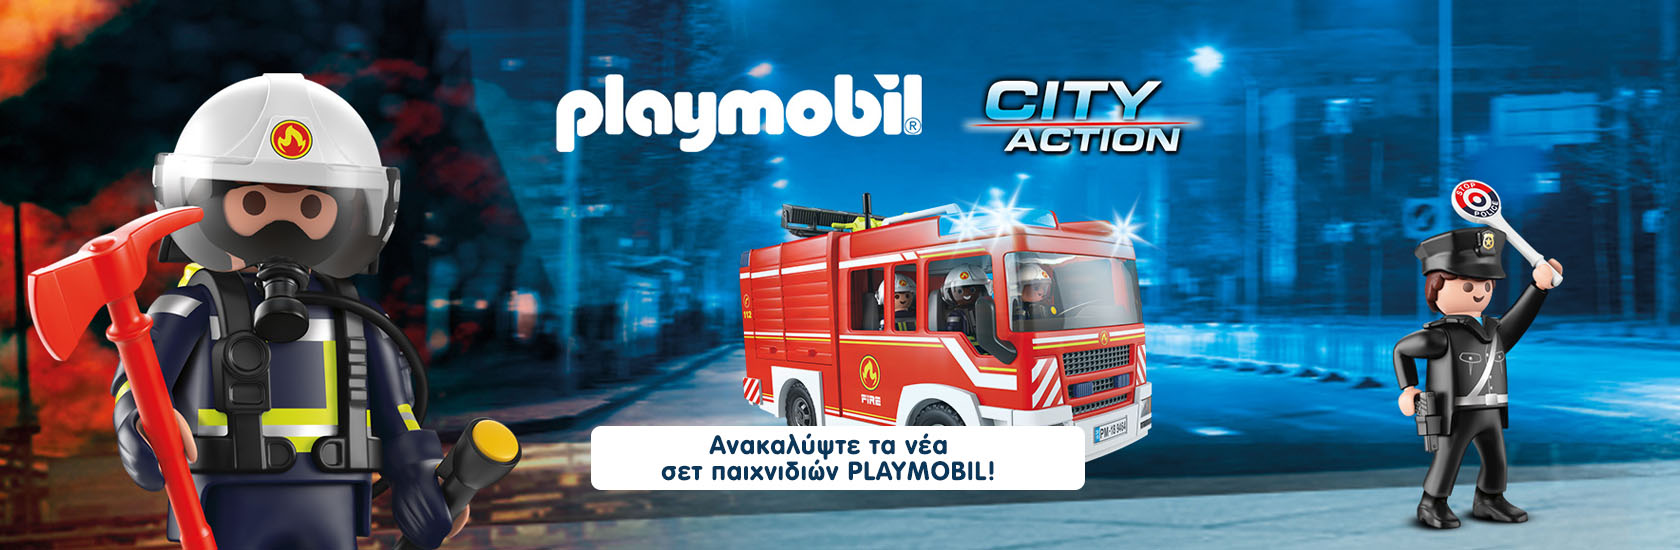 Playmobil Junior and Disney: Ο Μικυ Μαους Και Το Κρις-Κραφτ  (71707)